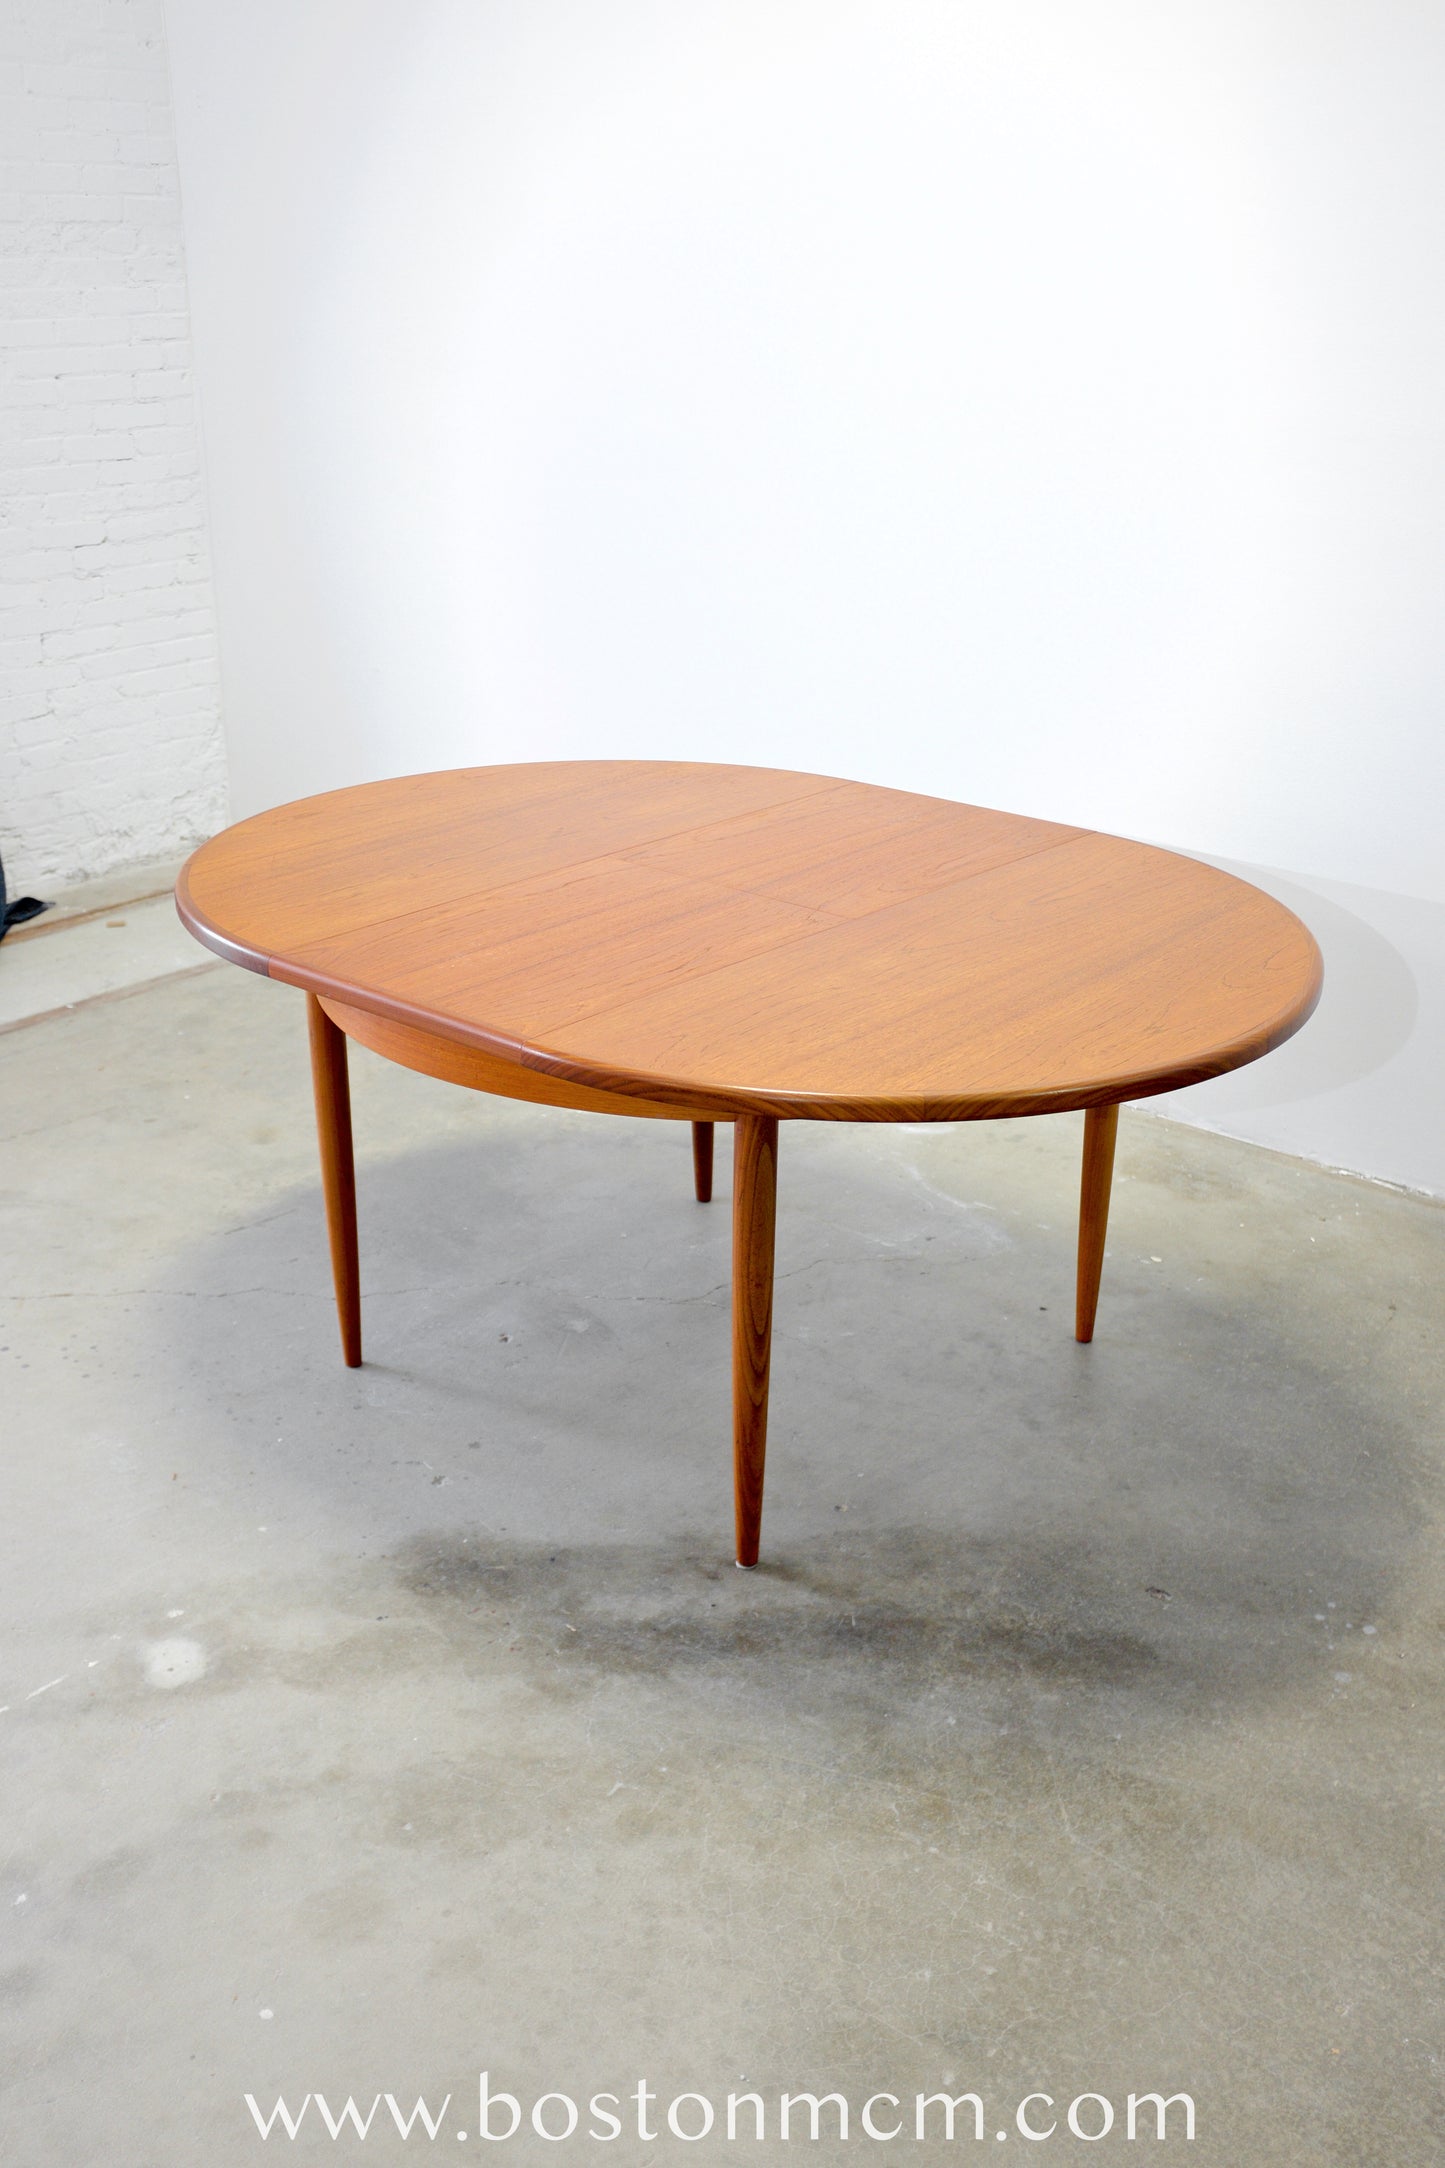 G-Plan Furniture Teak "Fresco" Round Dining Table Designed by V. B. Wilkins